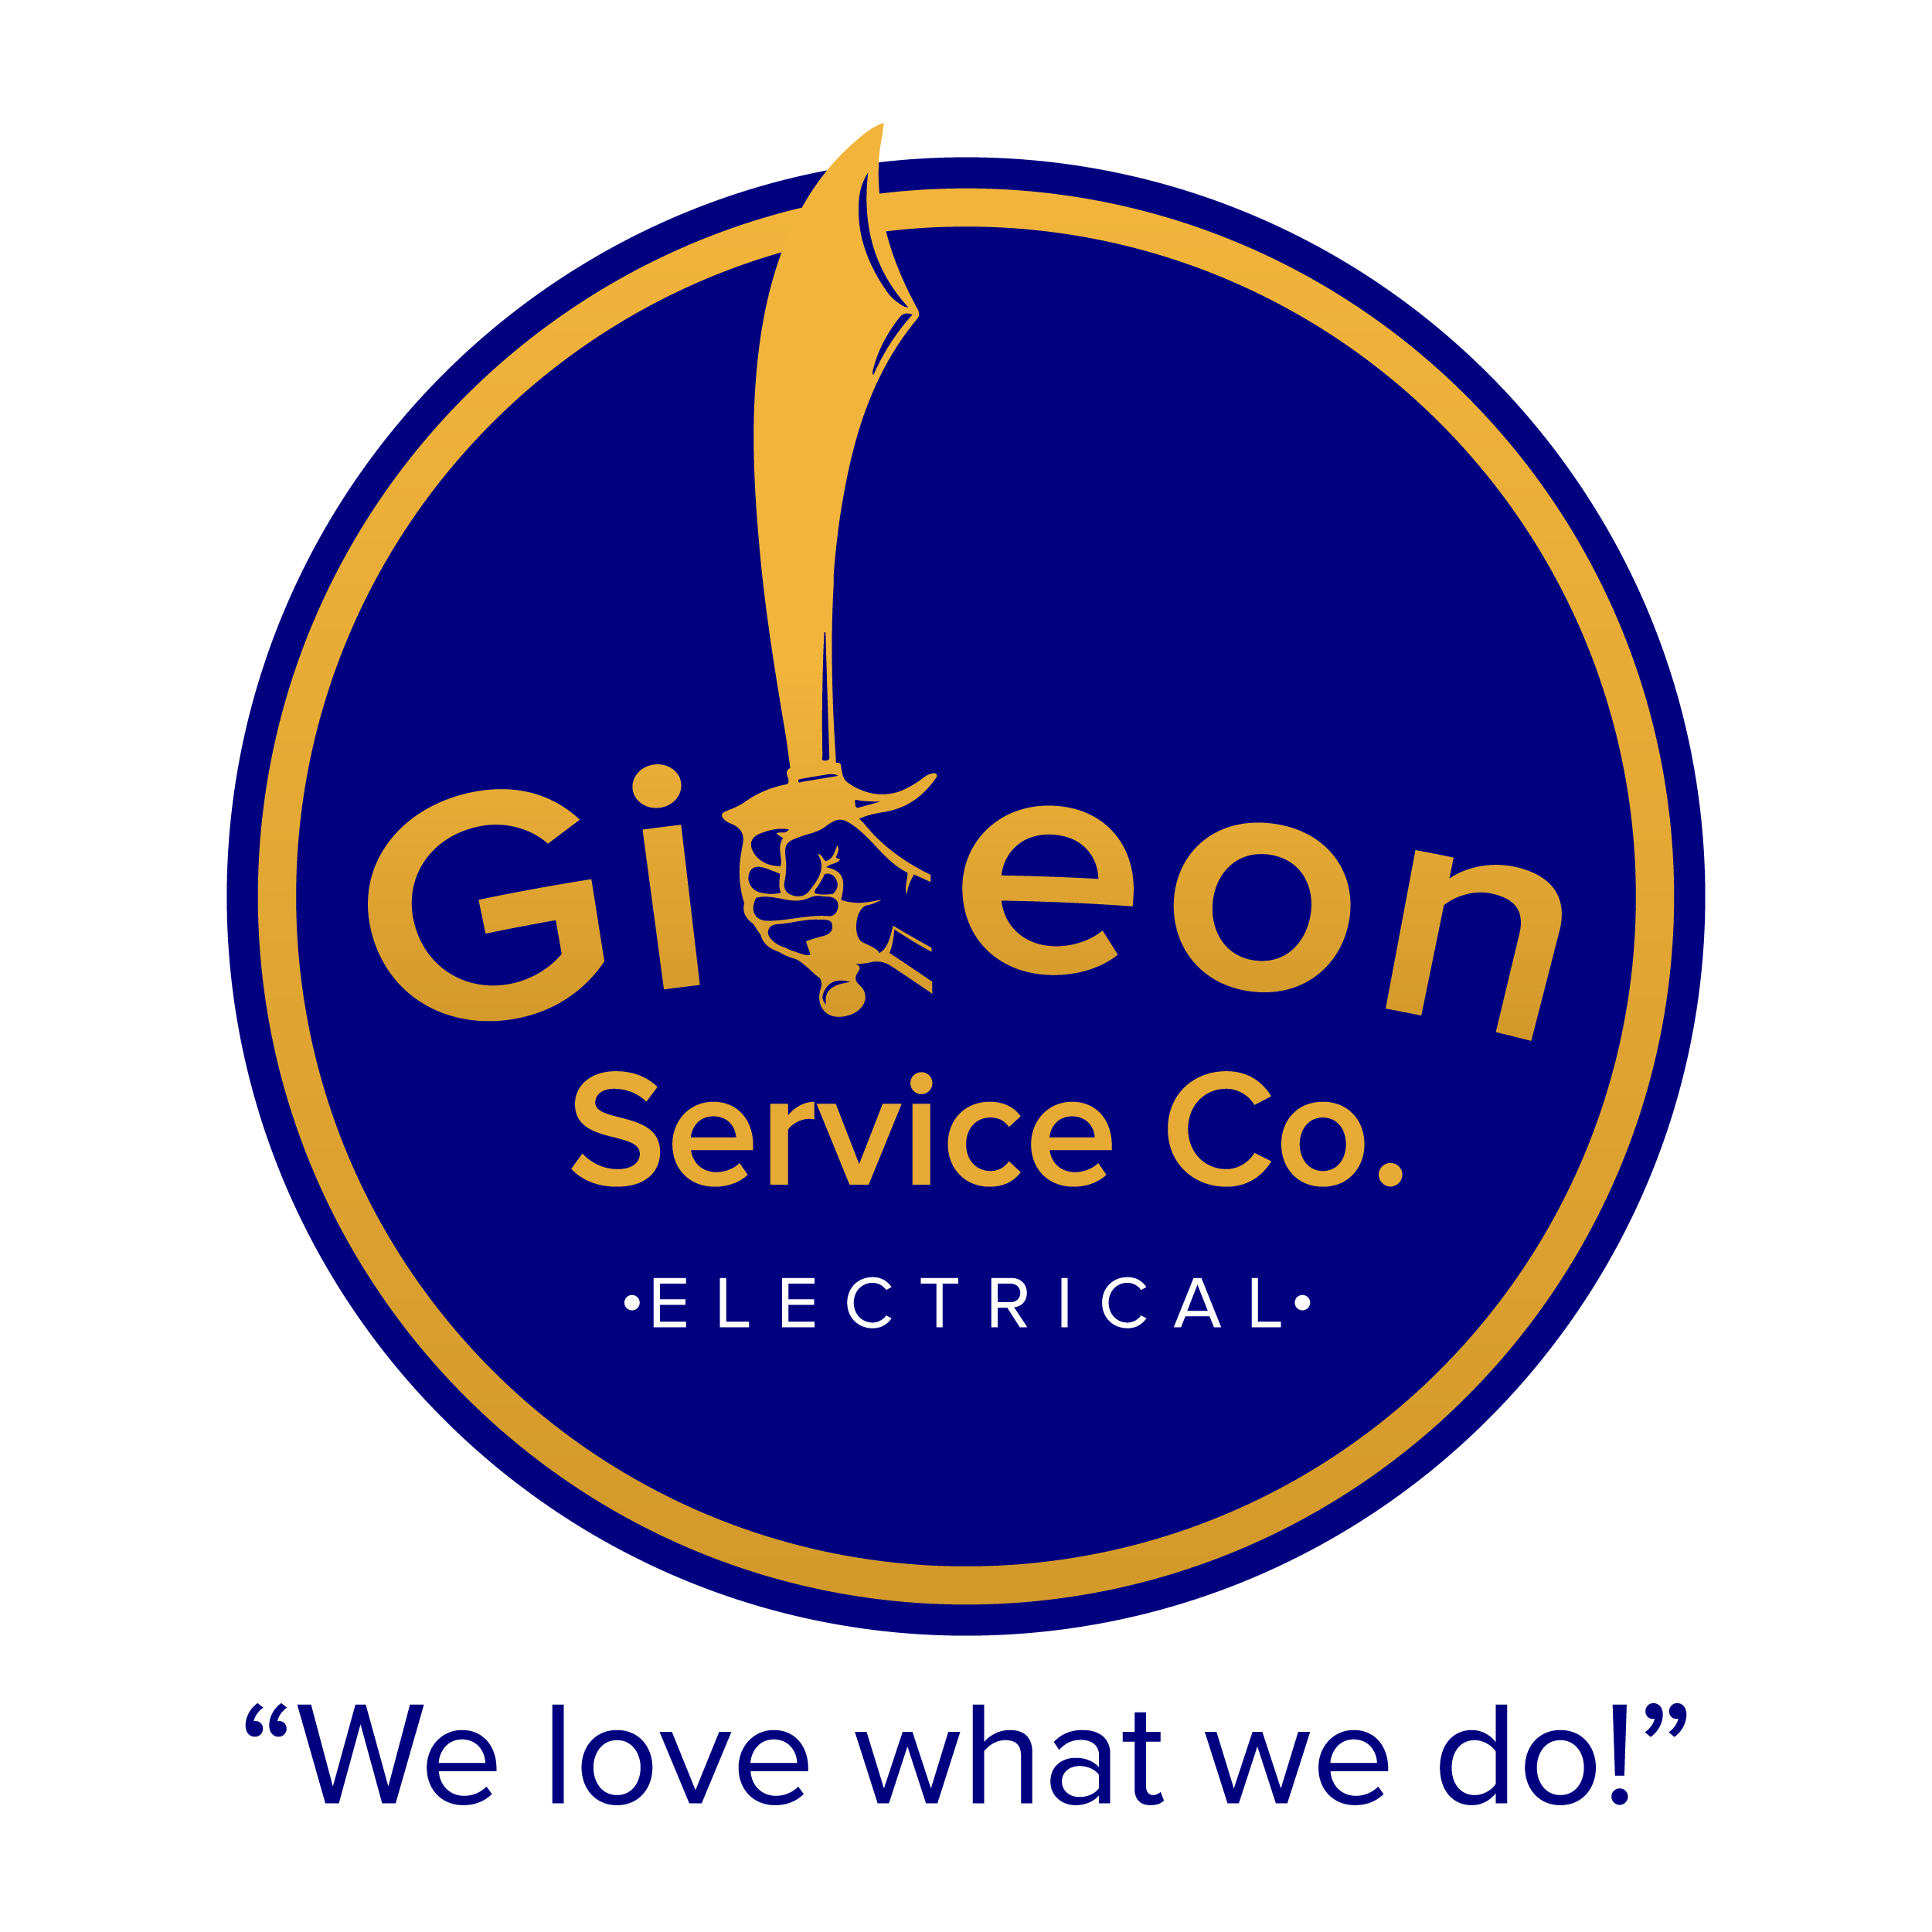 Gideon Service Company Logo